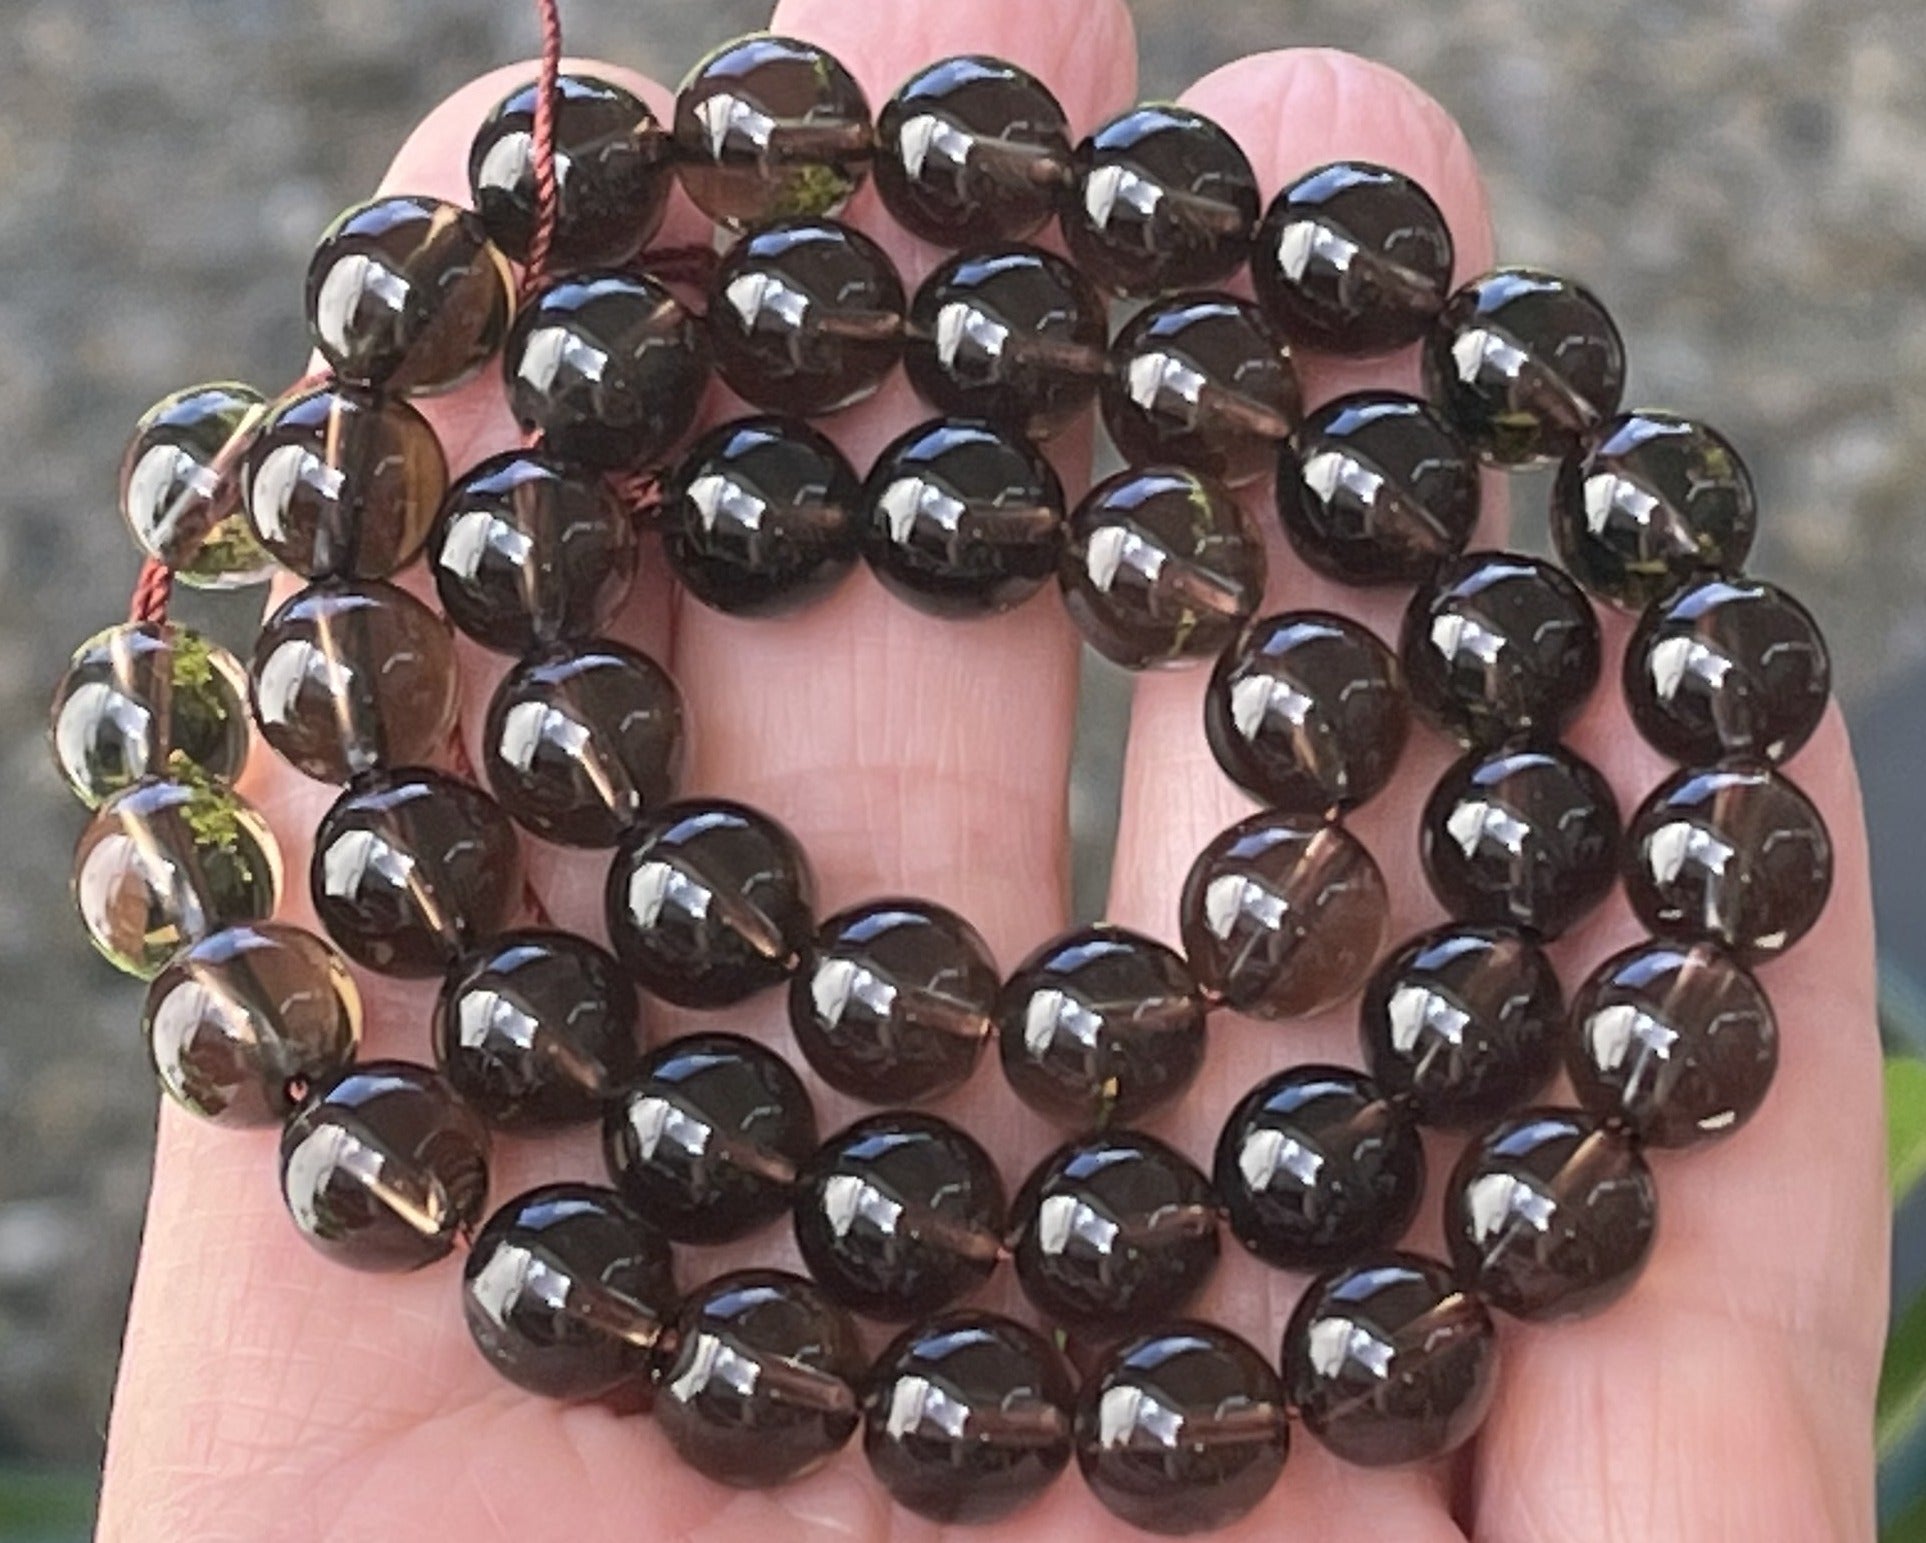 Smoky Quartz 8mm round gemstone beads 15.5" strand - Oz Beads 